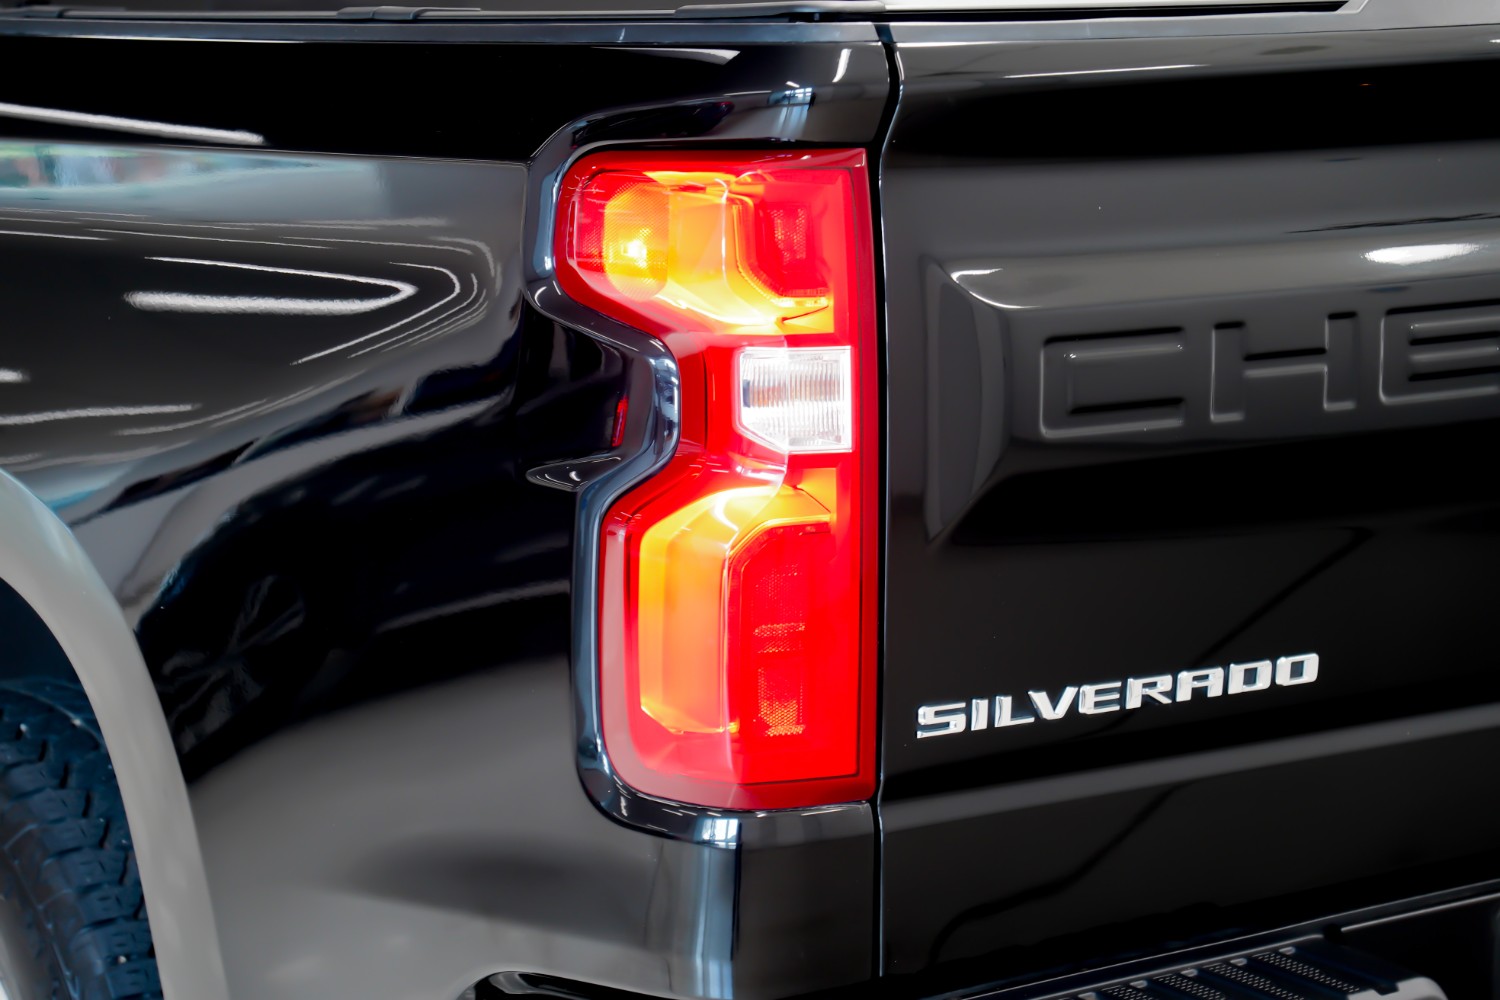 2020 Chevrolet Silverado T1 LTZ Premium Edition Ute Image 16